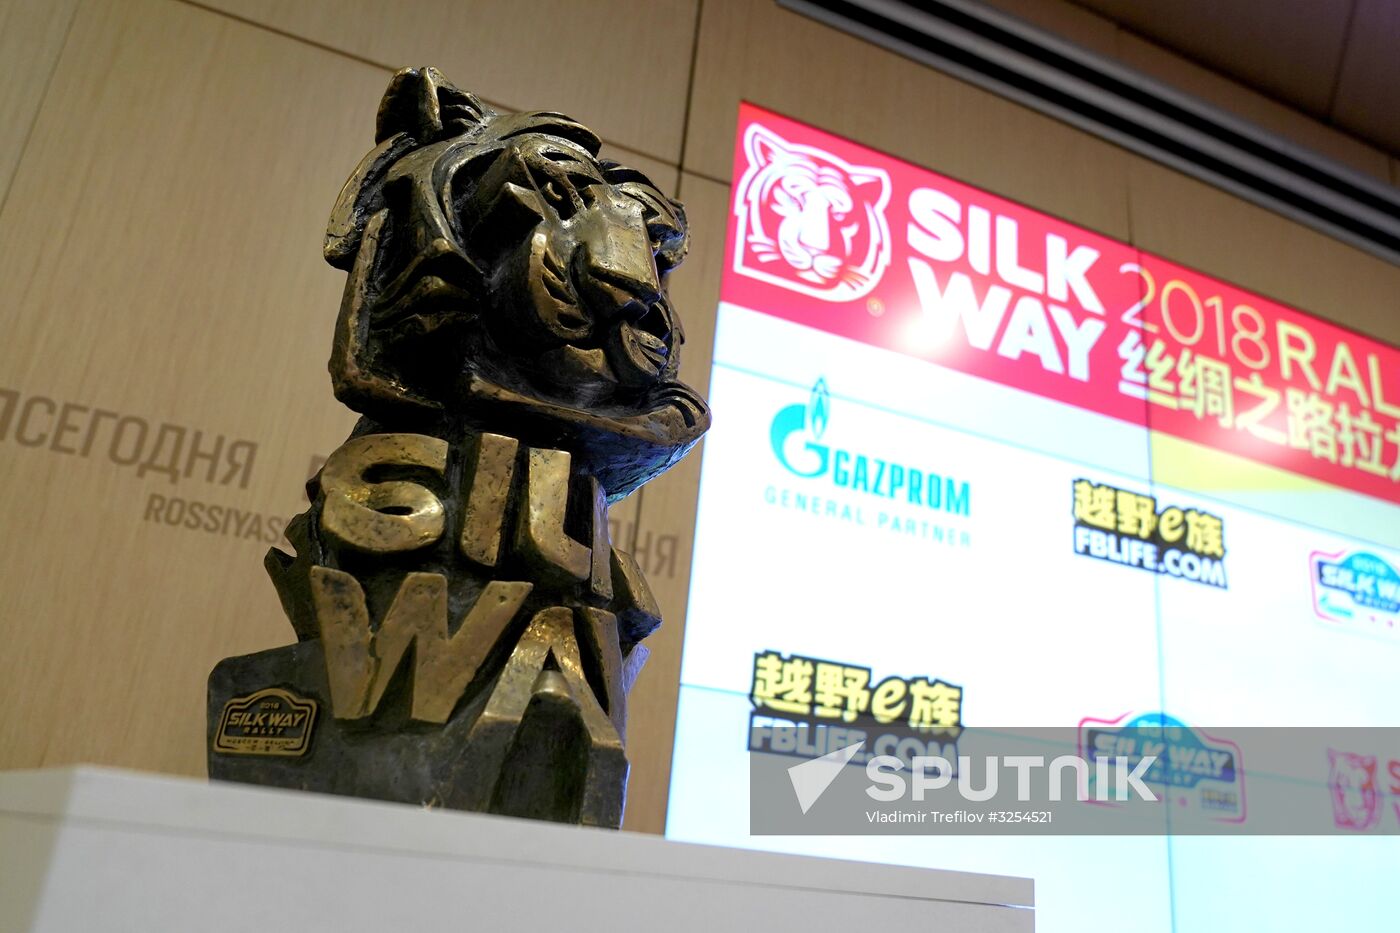 News conference on 2018 Silk Way Rally